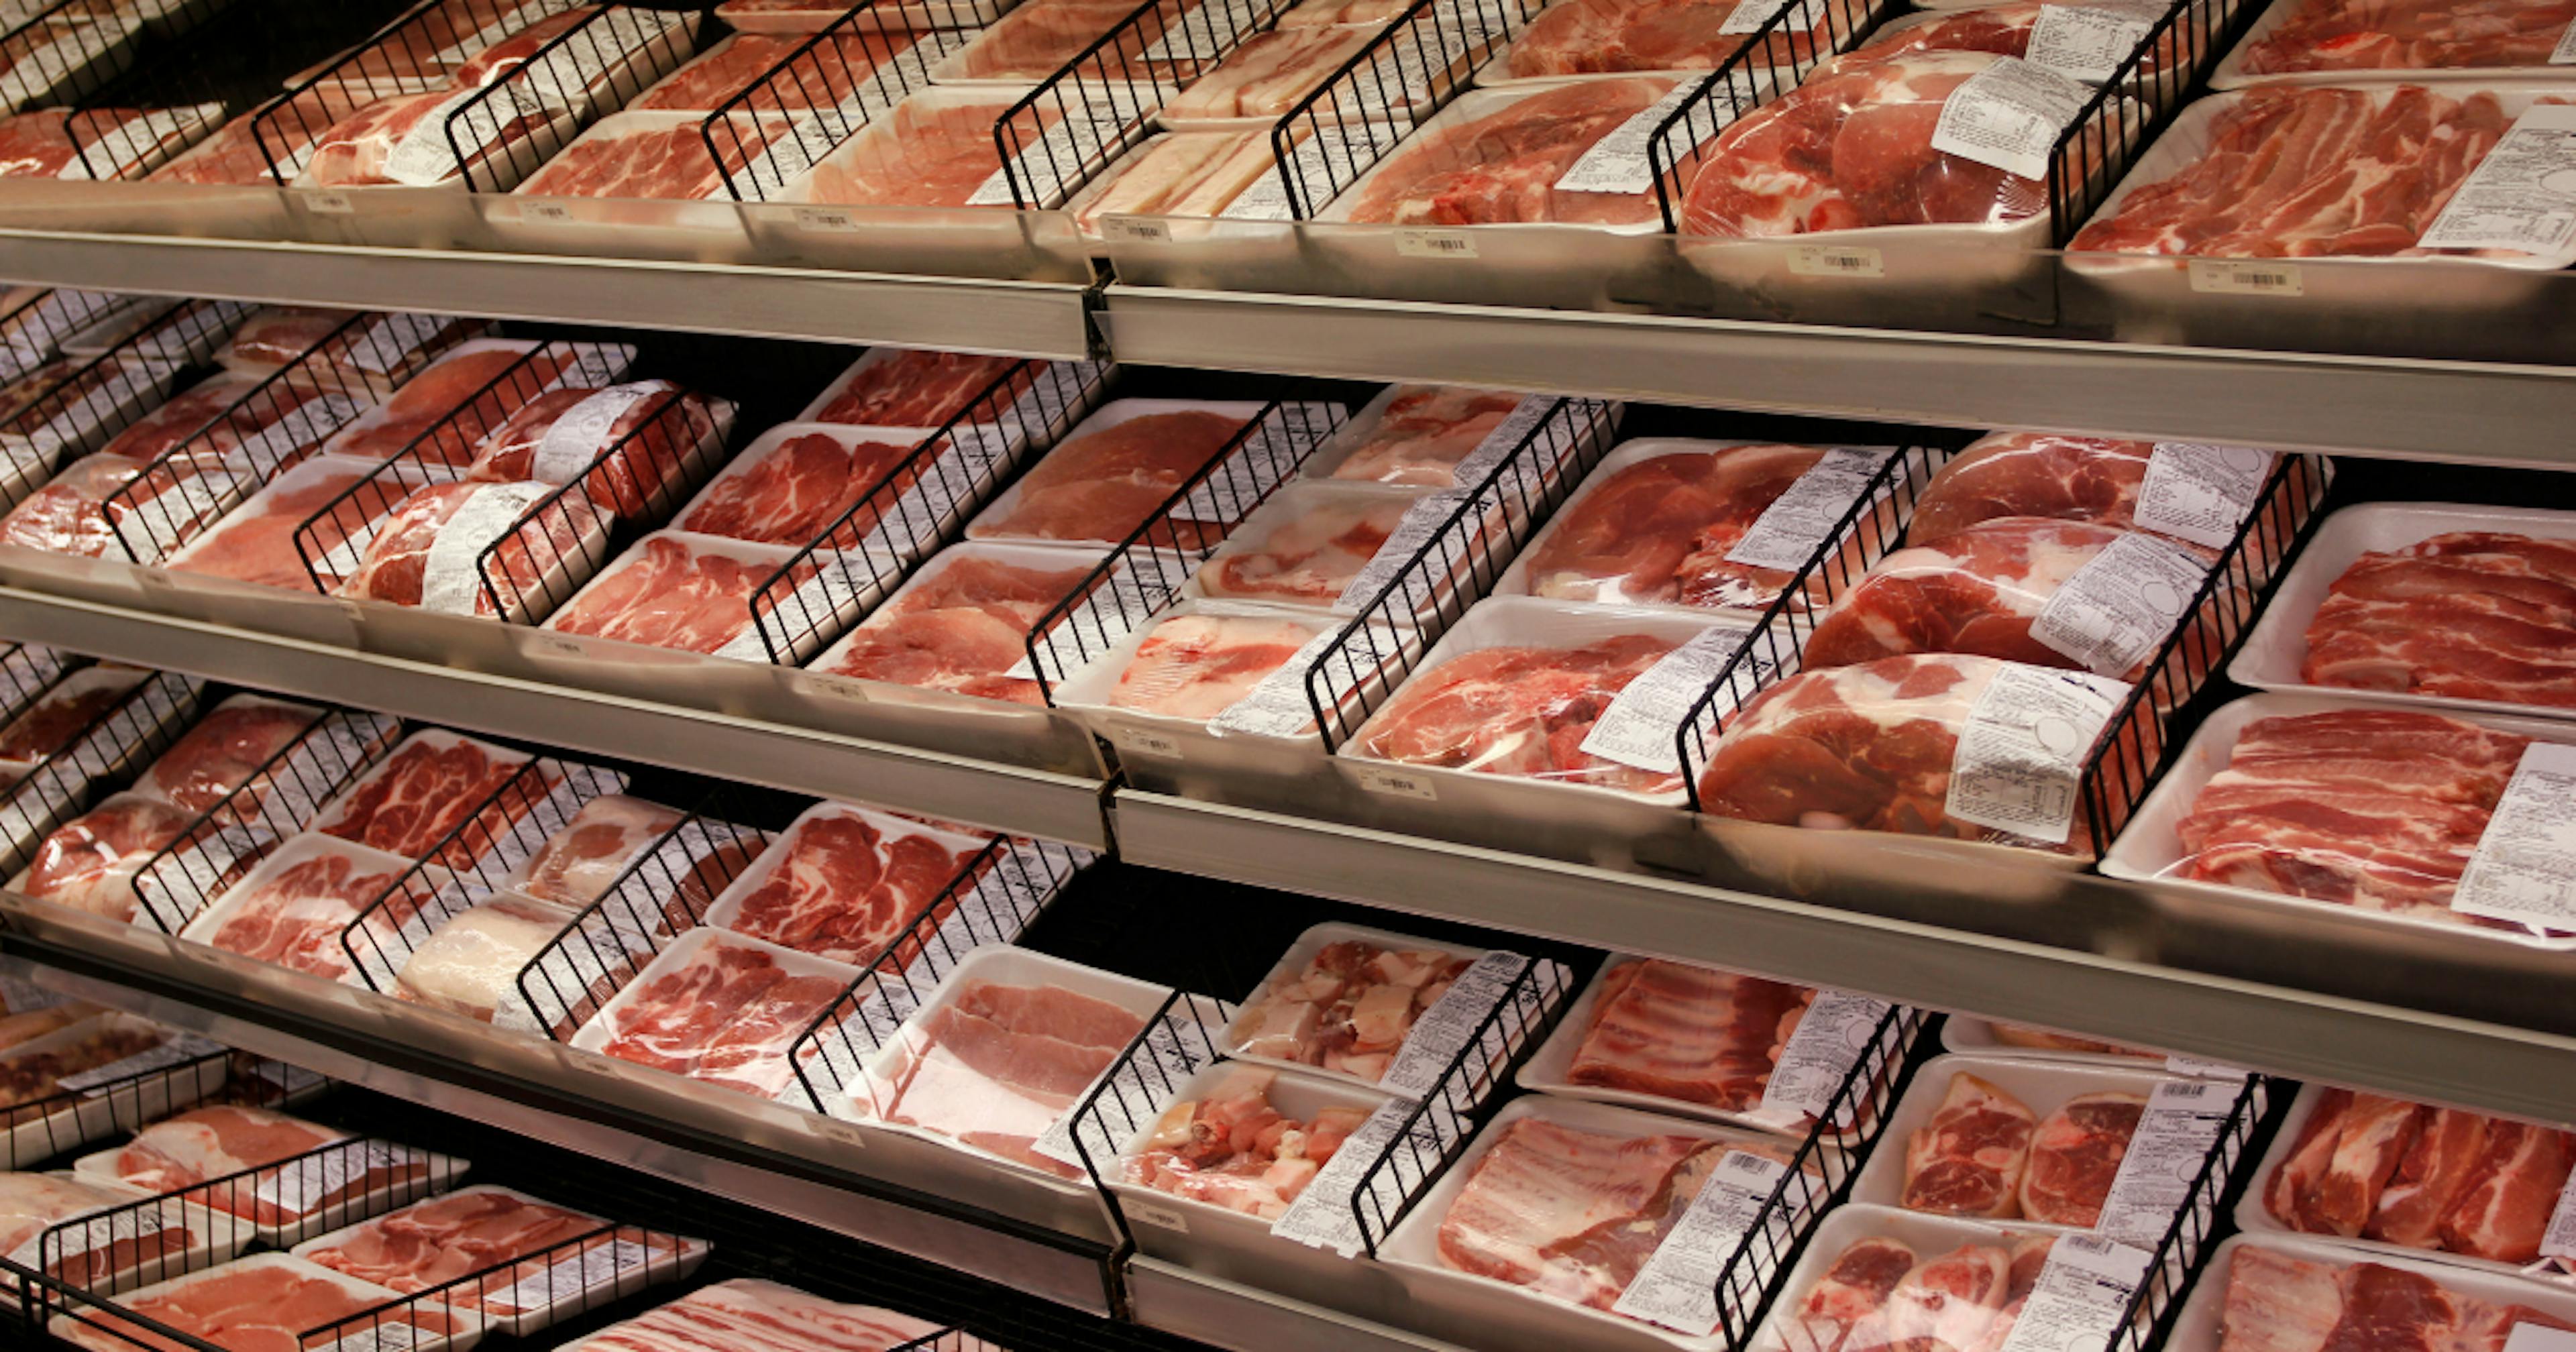 Meat in supermarket shelves